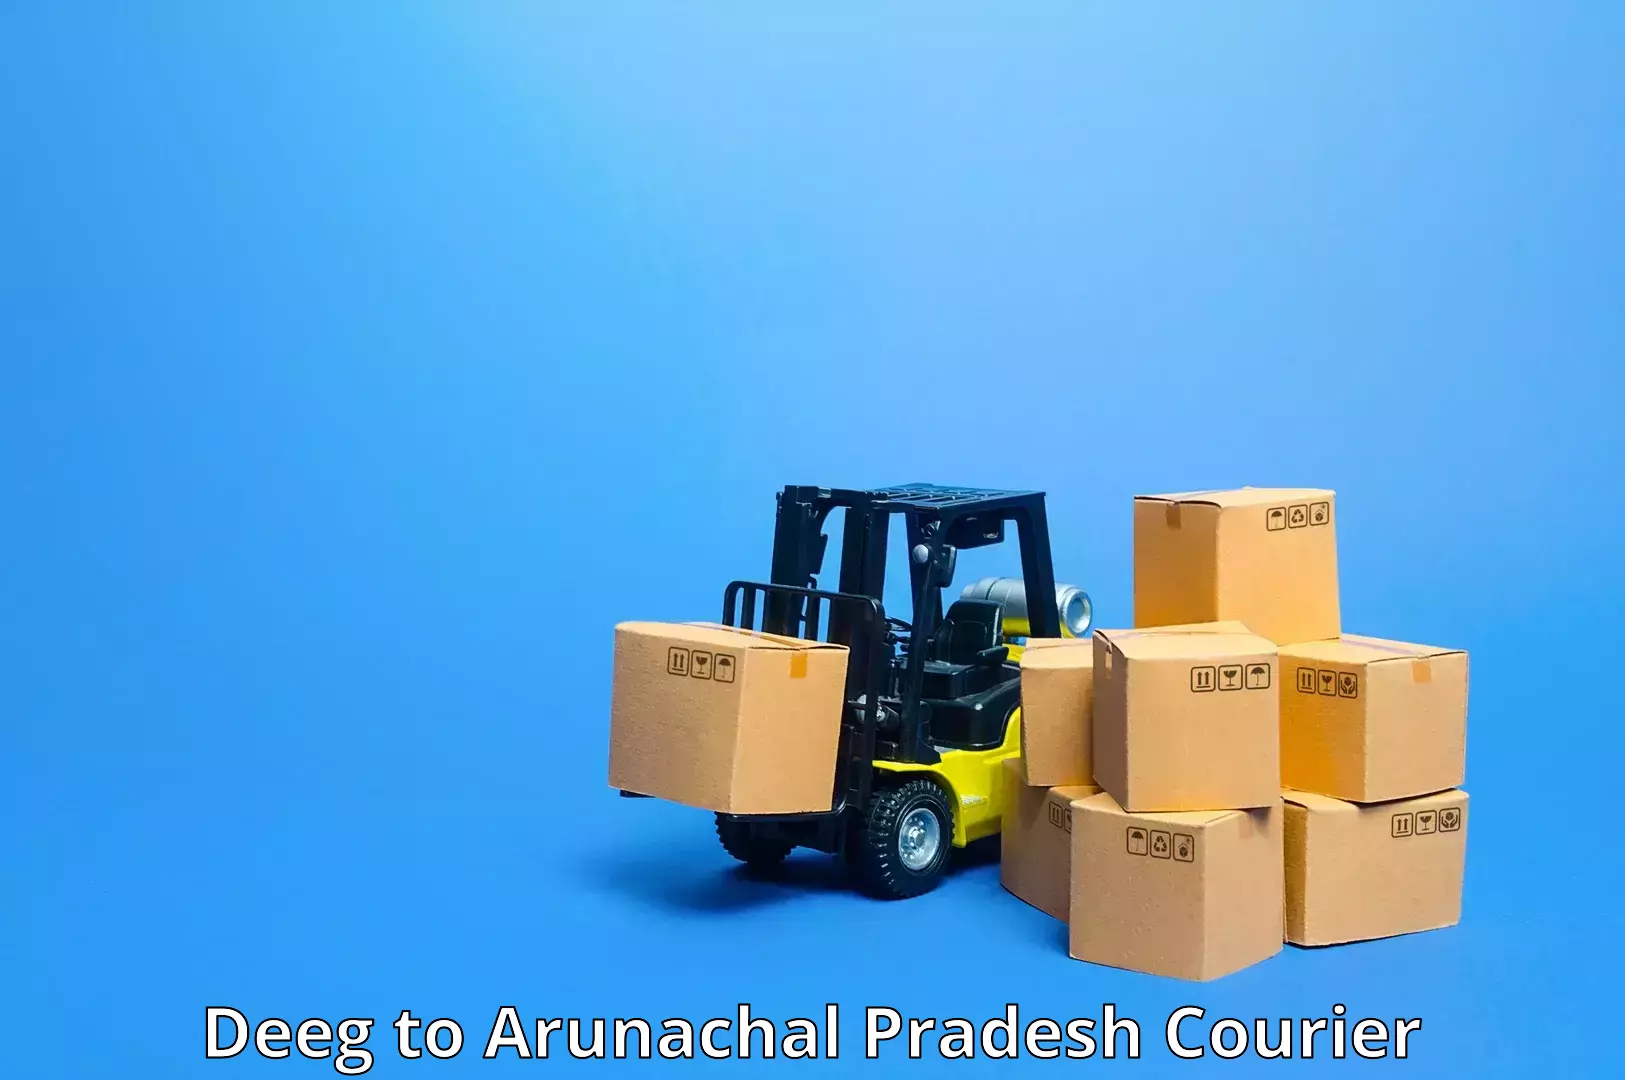 State-of-the-art courier technology Deeg to Arunachal Pradesh